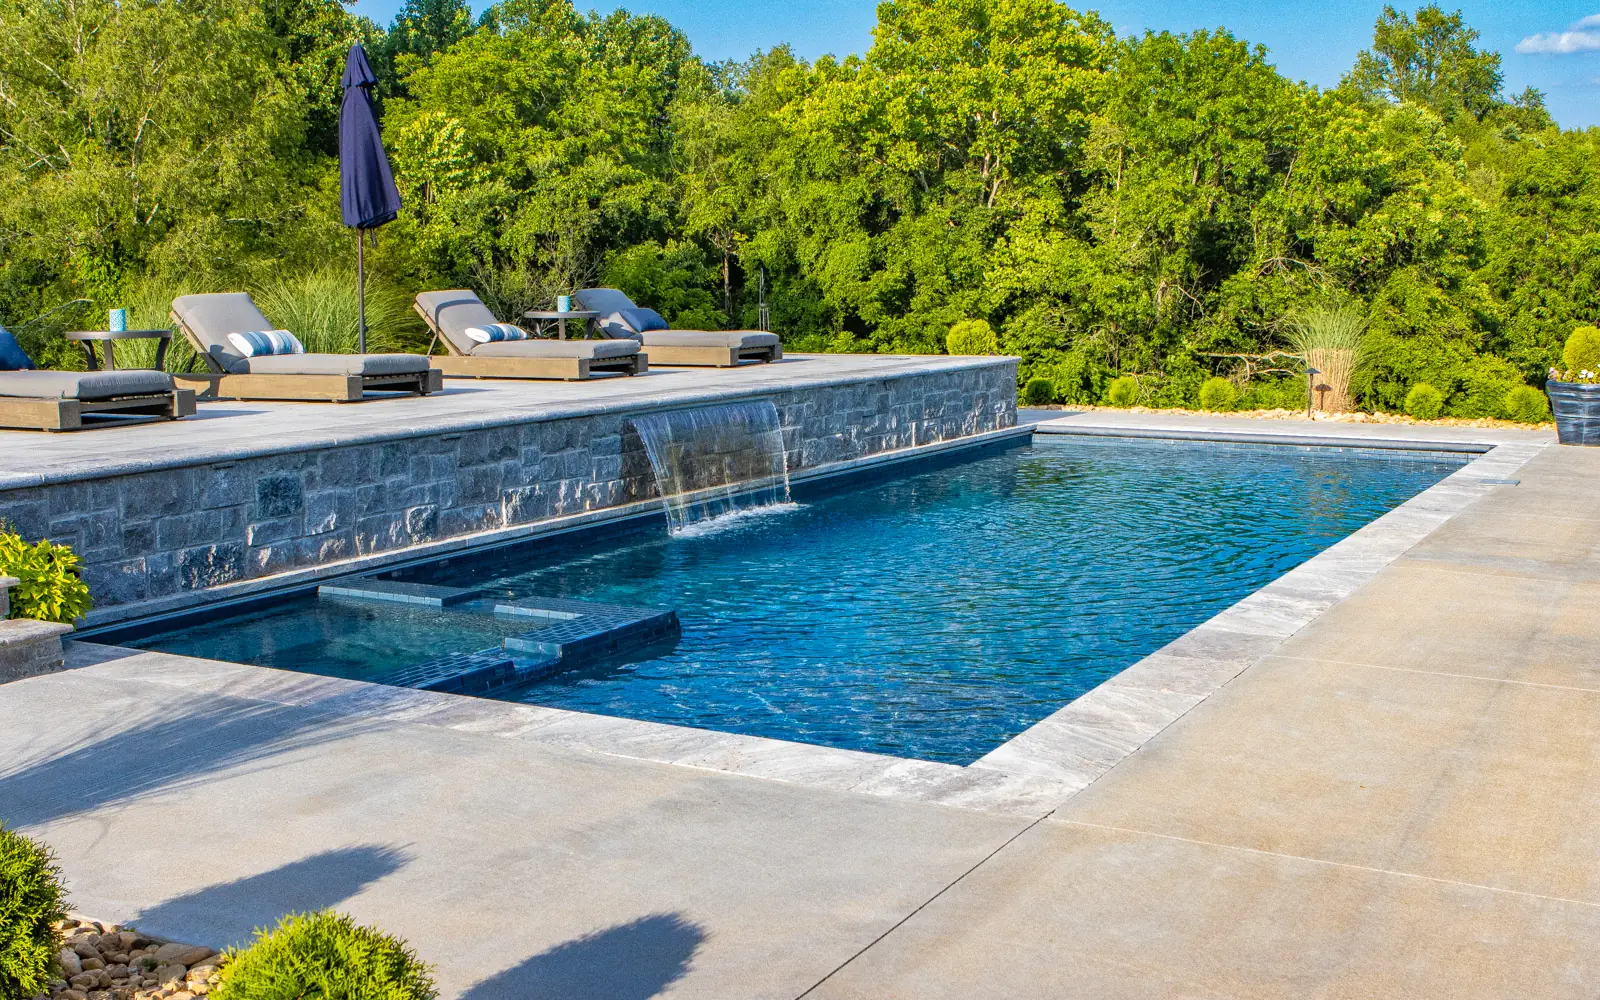 Vox Landscape Design: Southwestern Missouri’s premier choice for exceptional landscape design and expert fiberglass pool installations